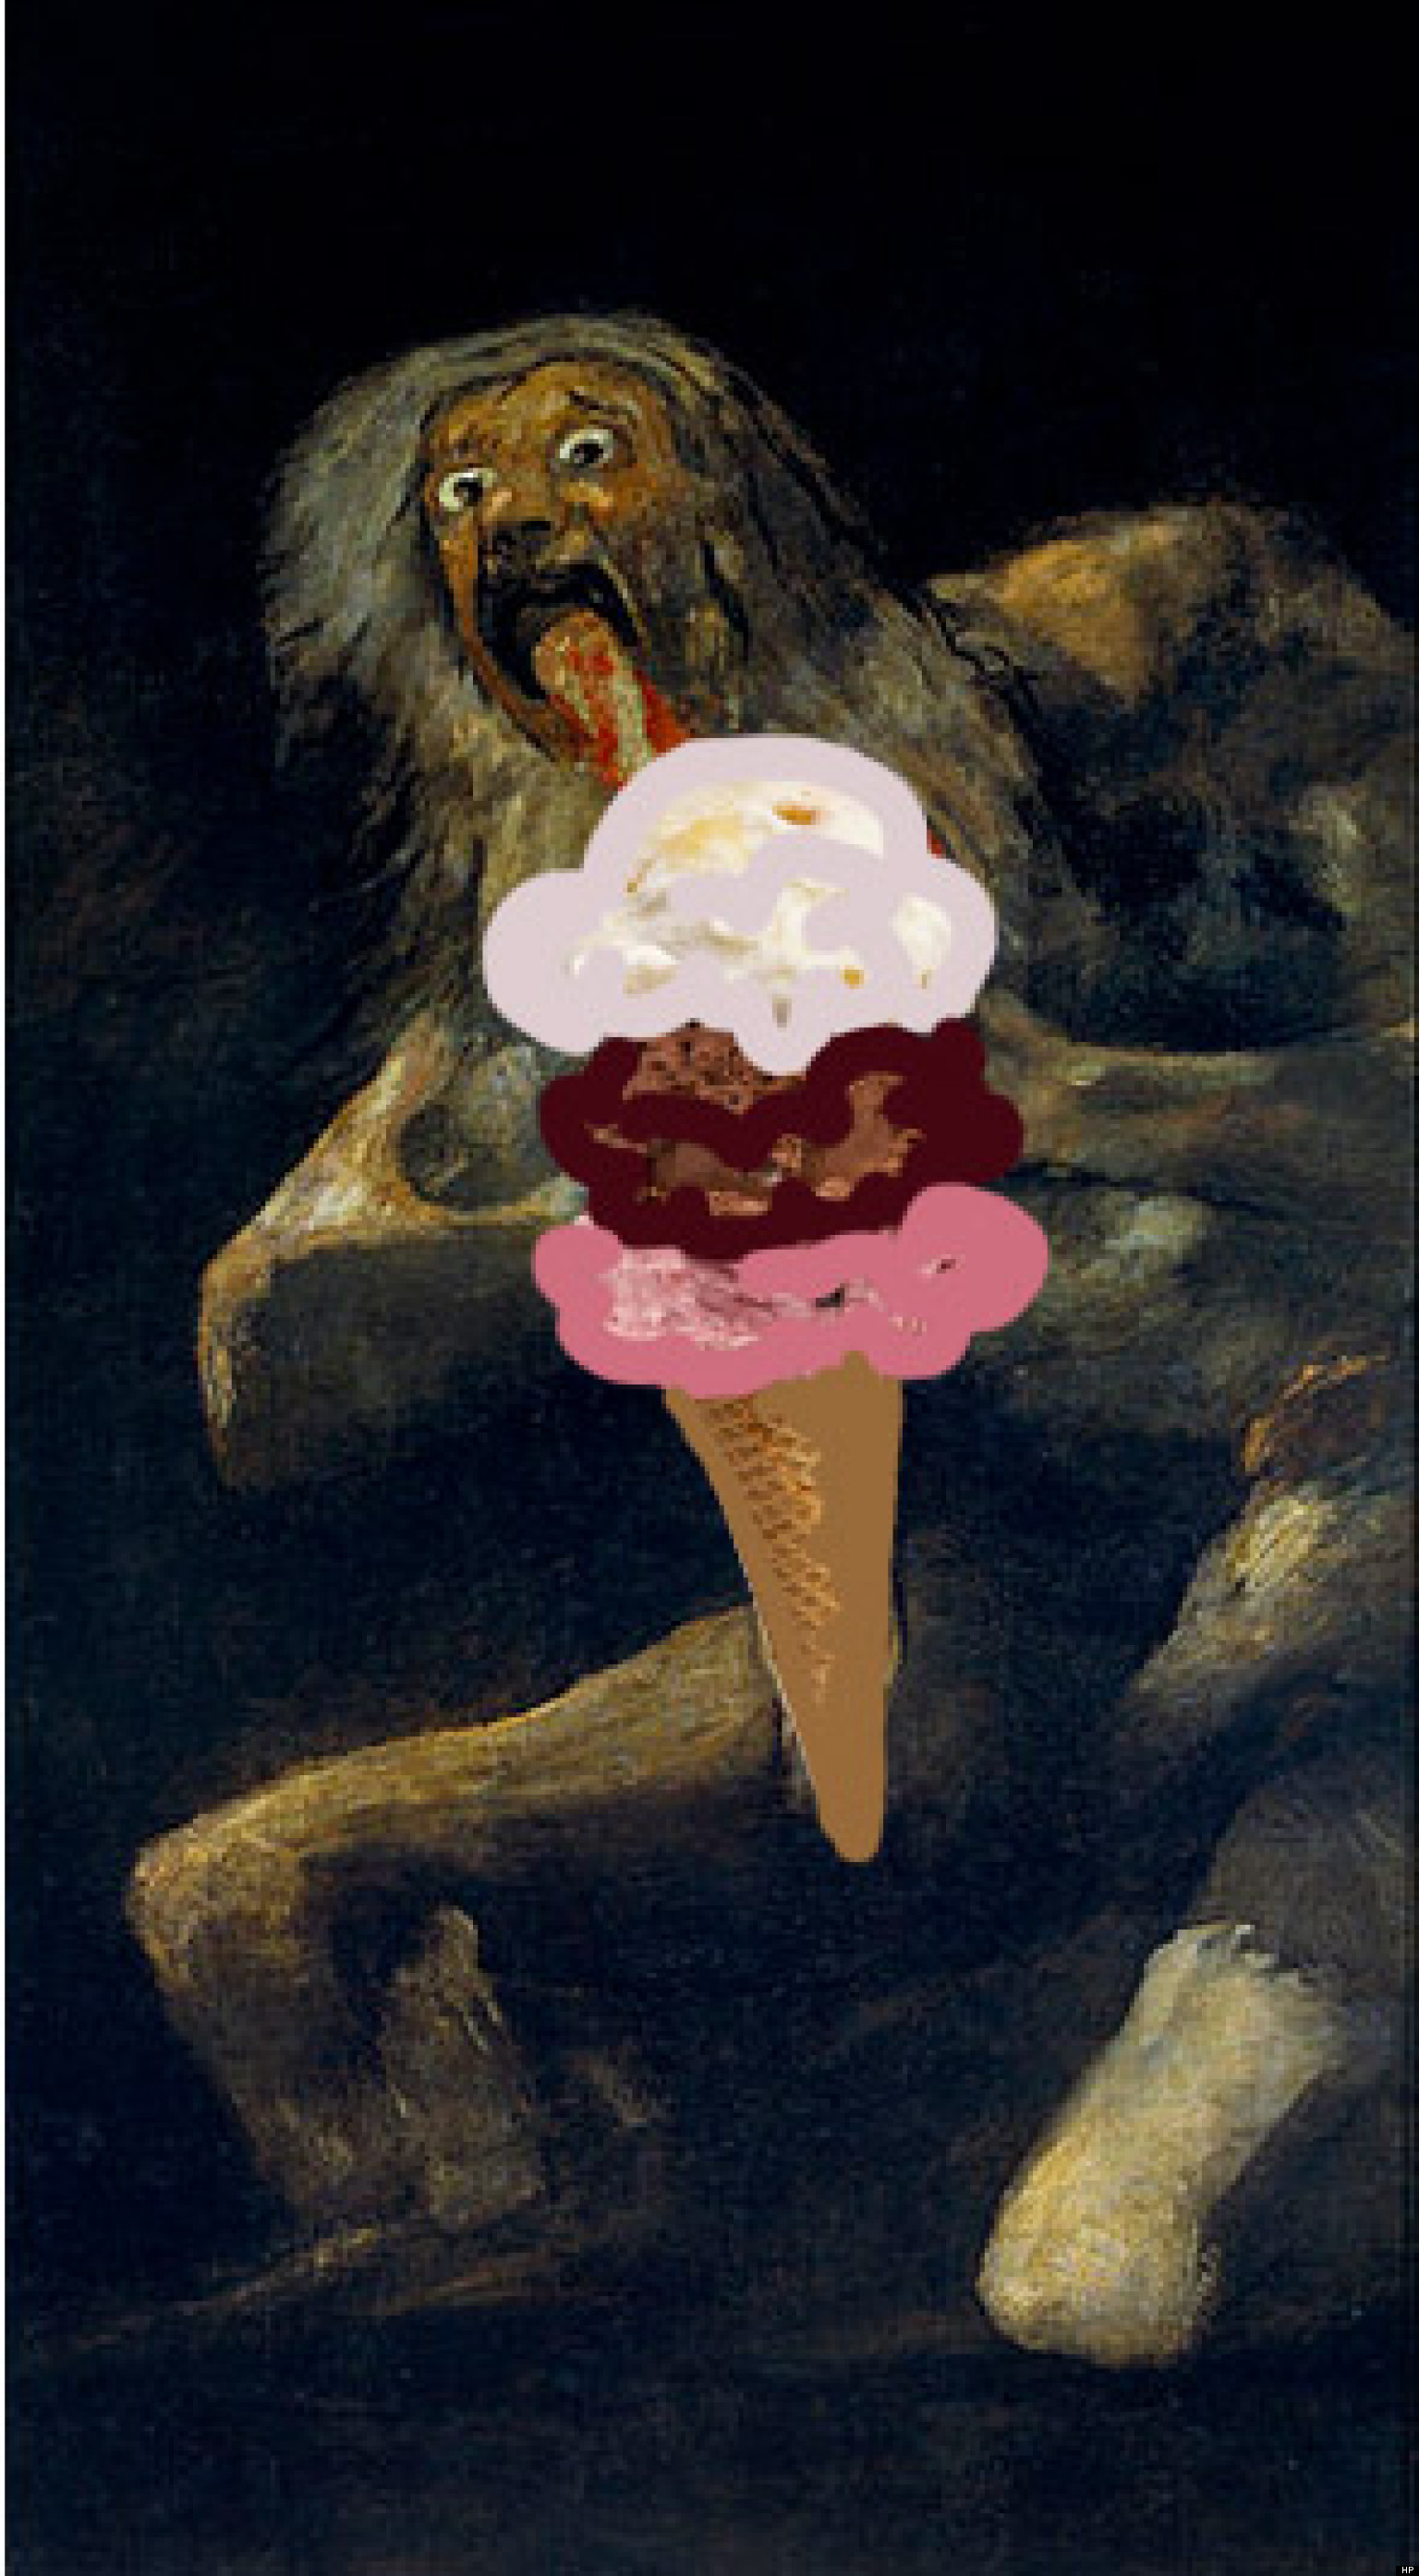 Francisco Goya Birthday: The Spanish Romantic Painter Would Turn 267